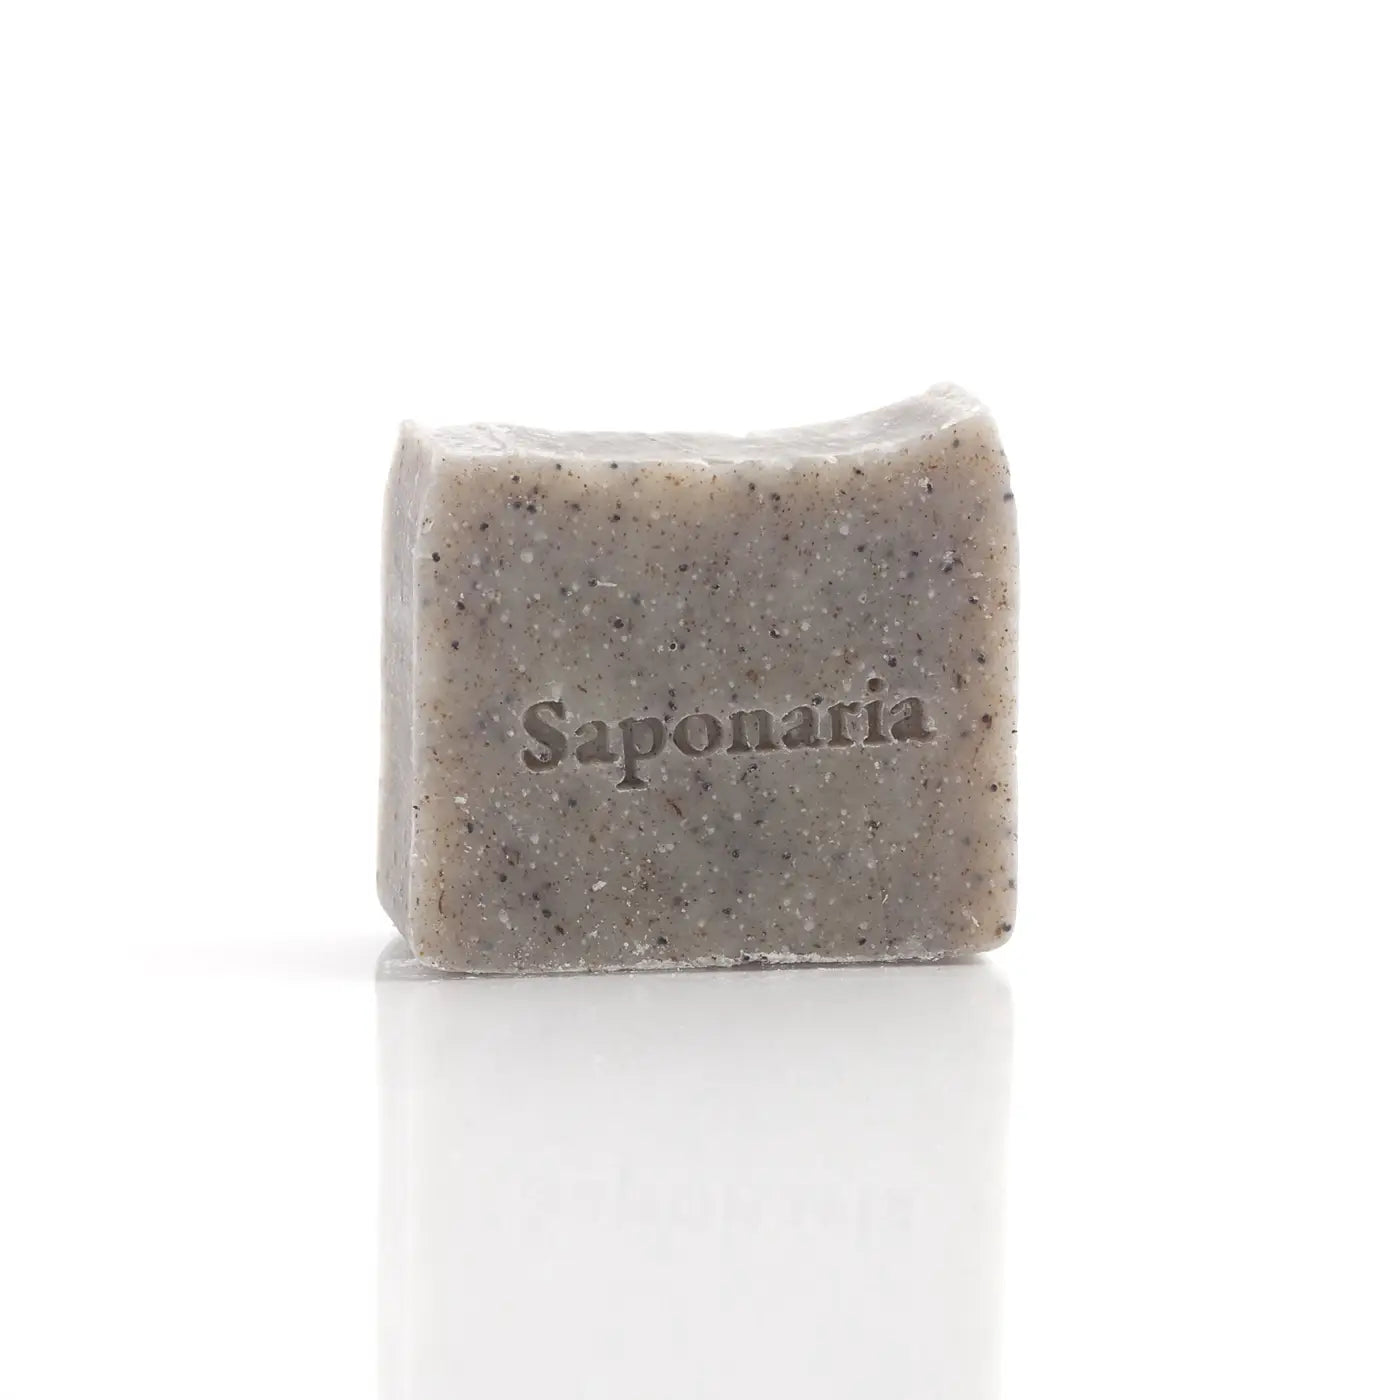 Saponaria Soap | THE EXFOLIANT